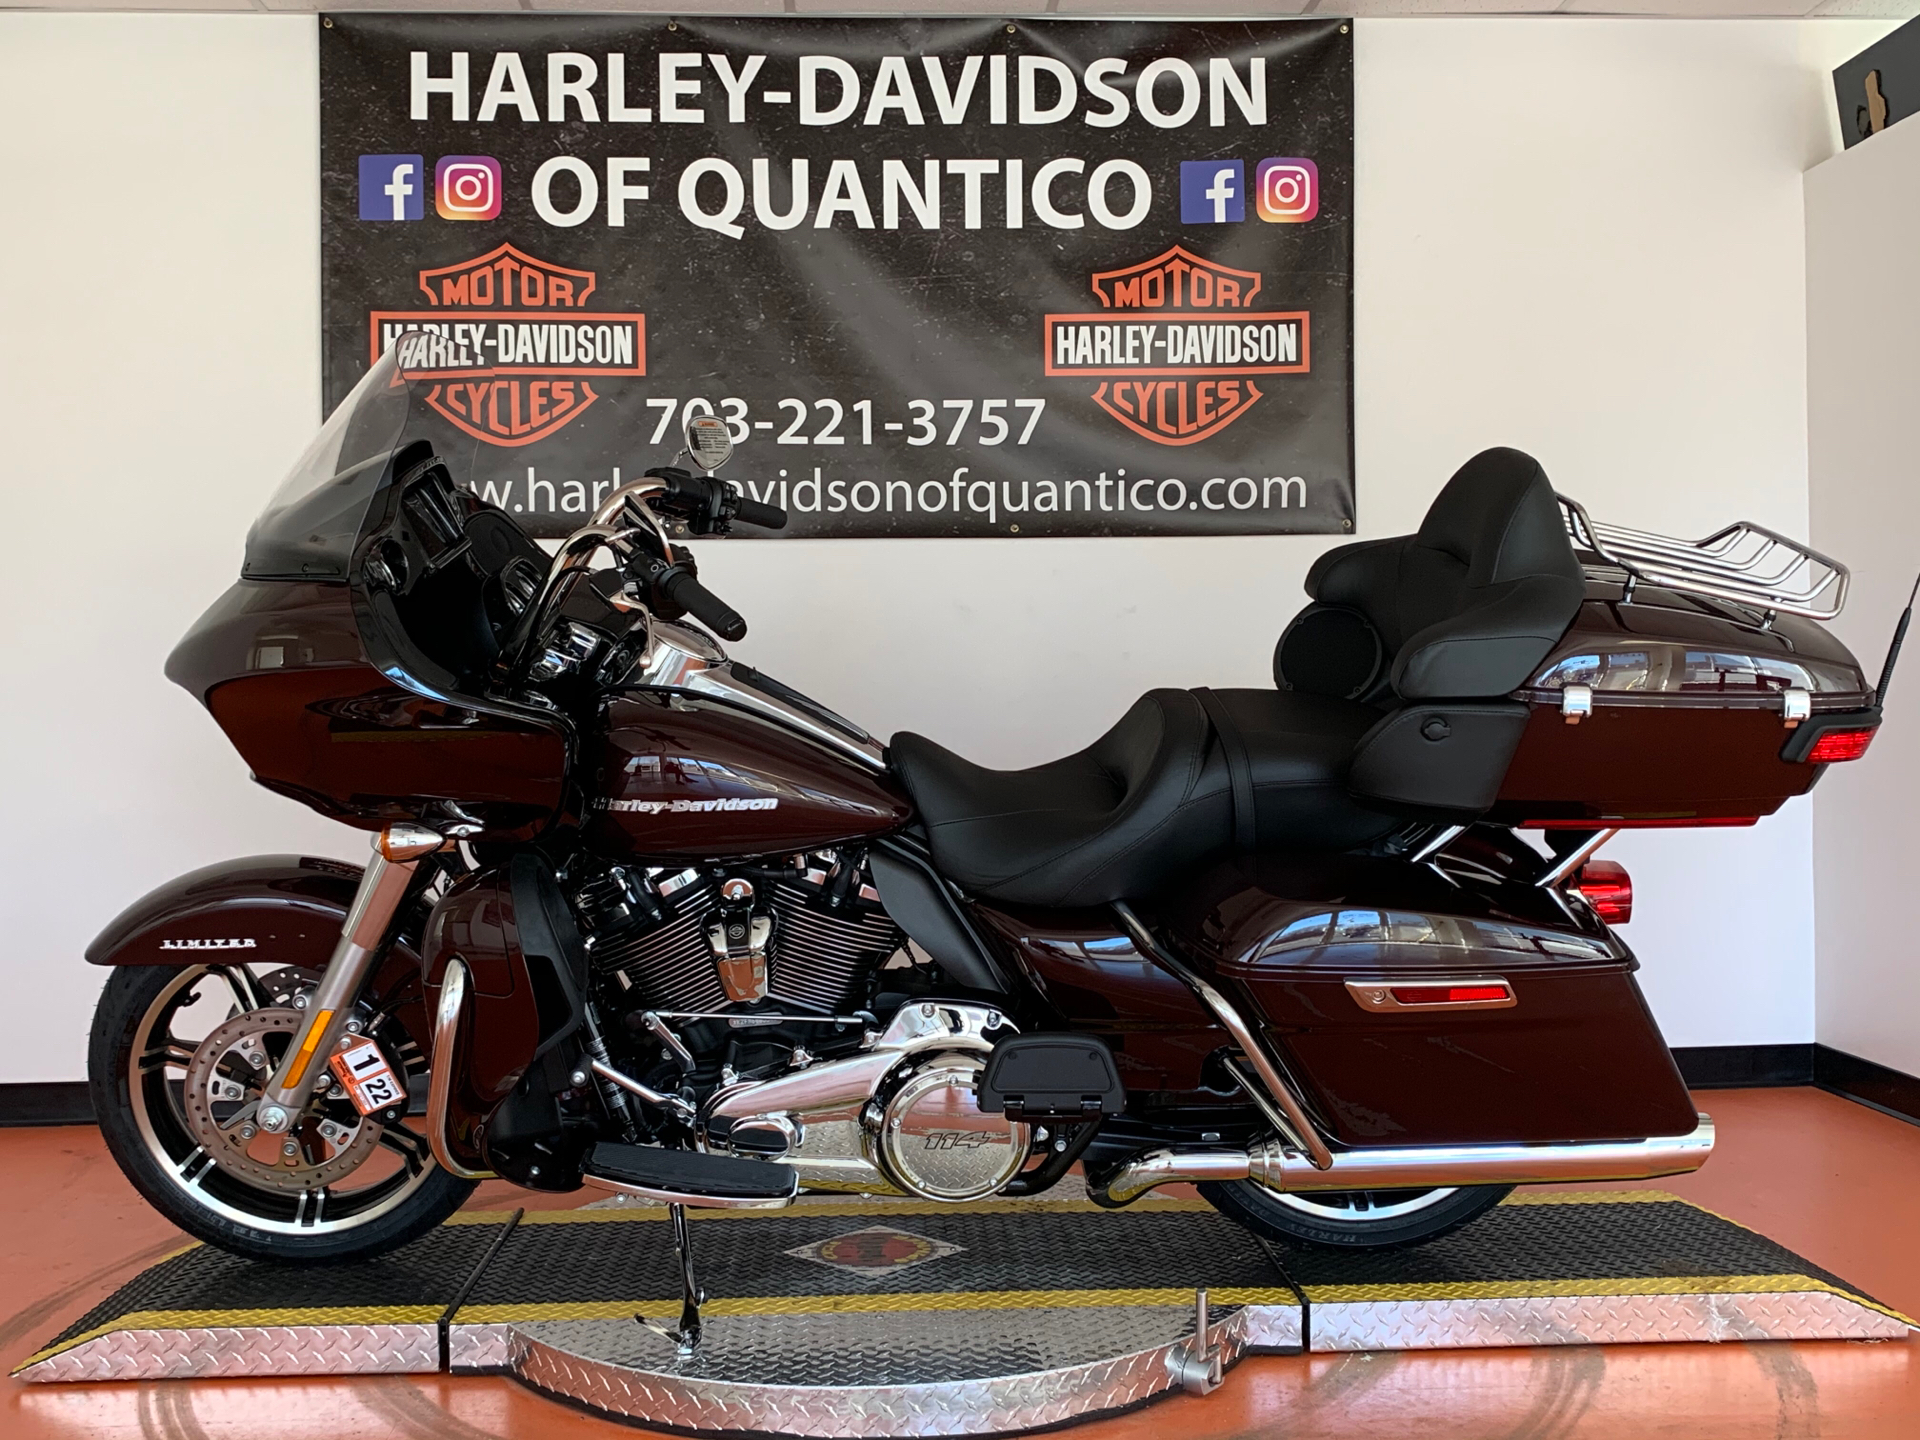 New 2021 Harley Davidson Road Glide Limited Midnight Crimson Motorcycles In Dumfries Va 606594